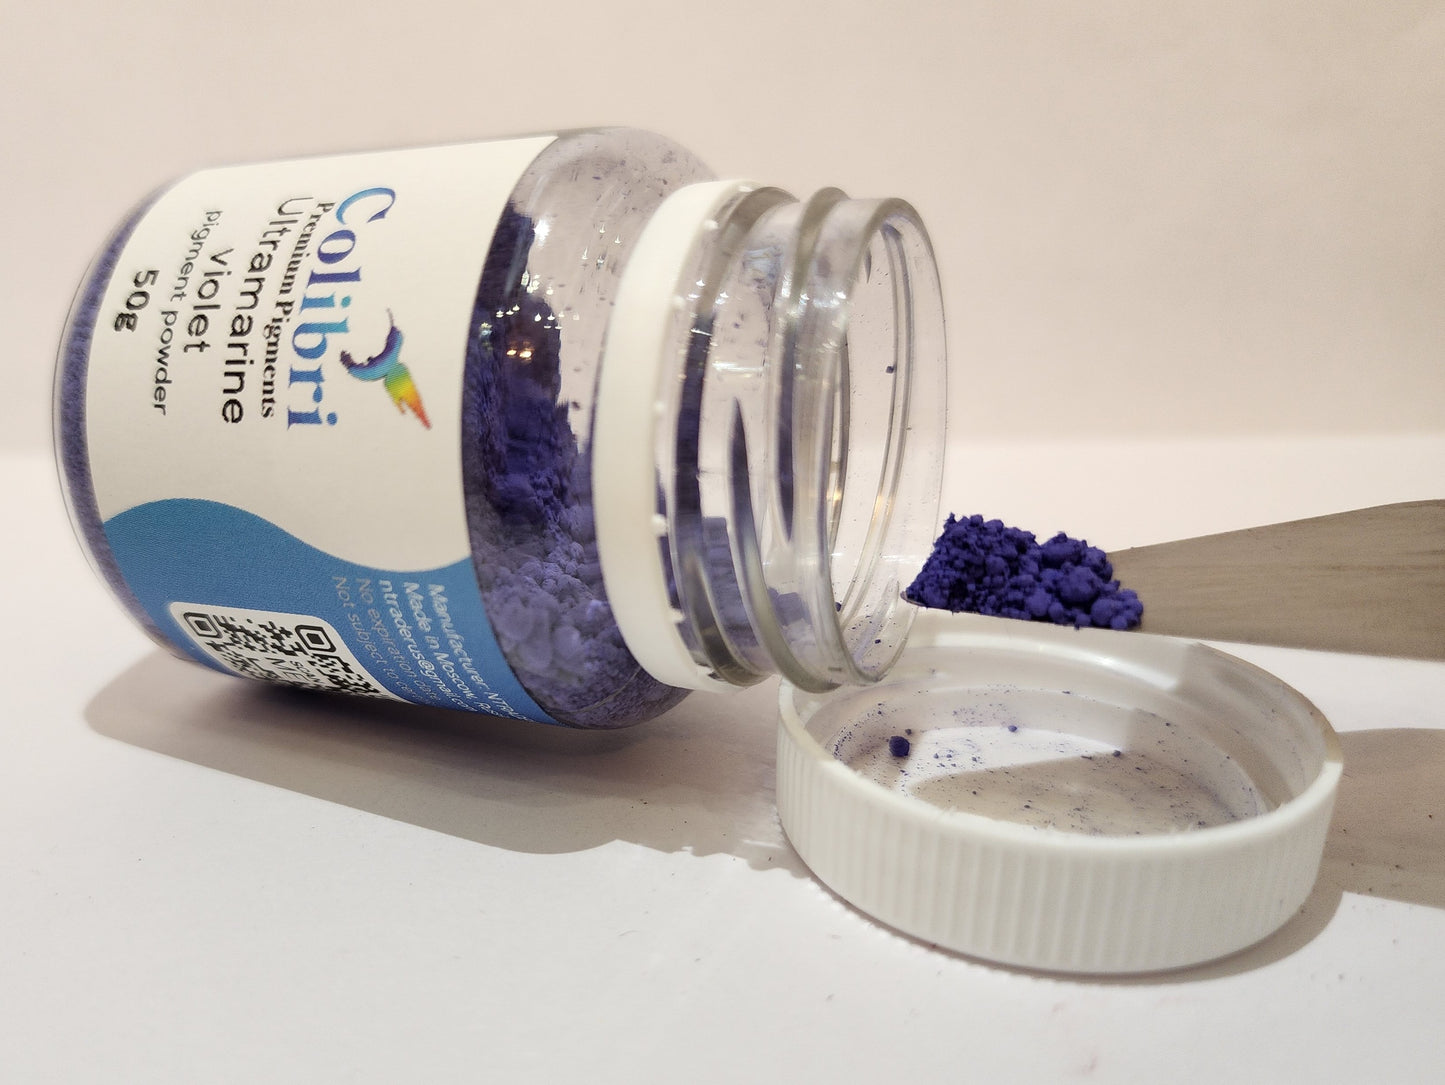 Ultramarine violet